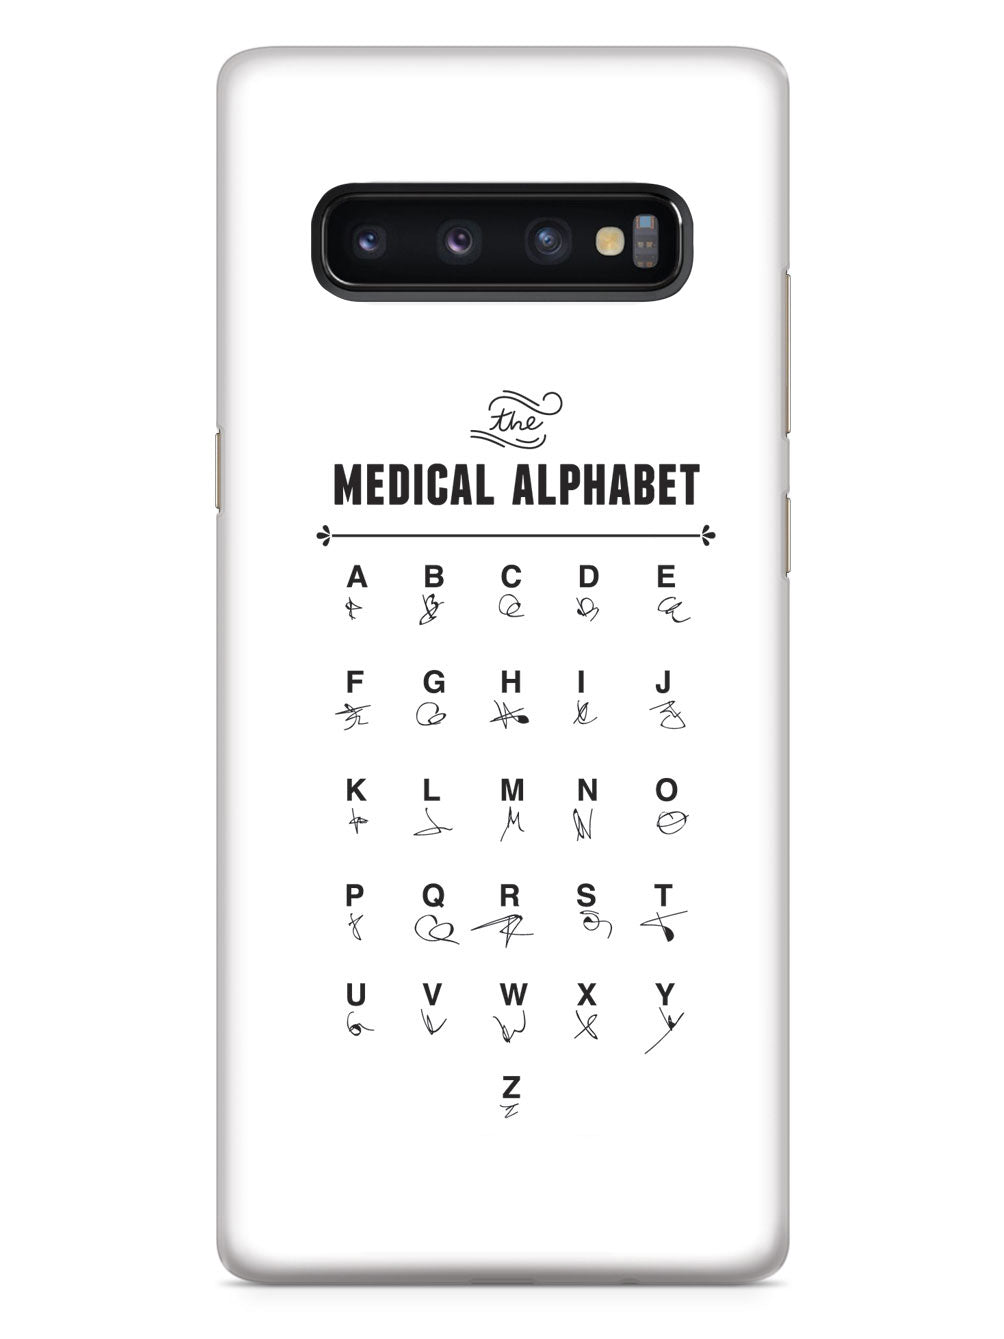 The Medical Alphabet Doctor's Case